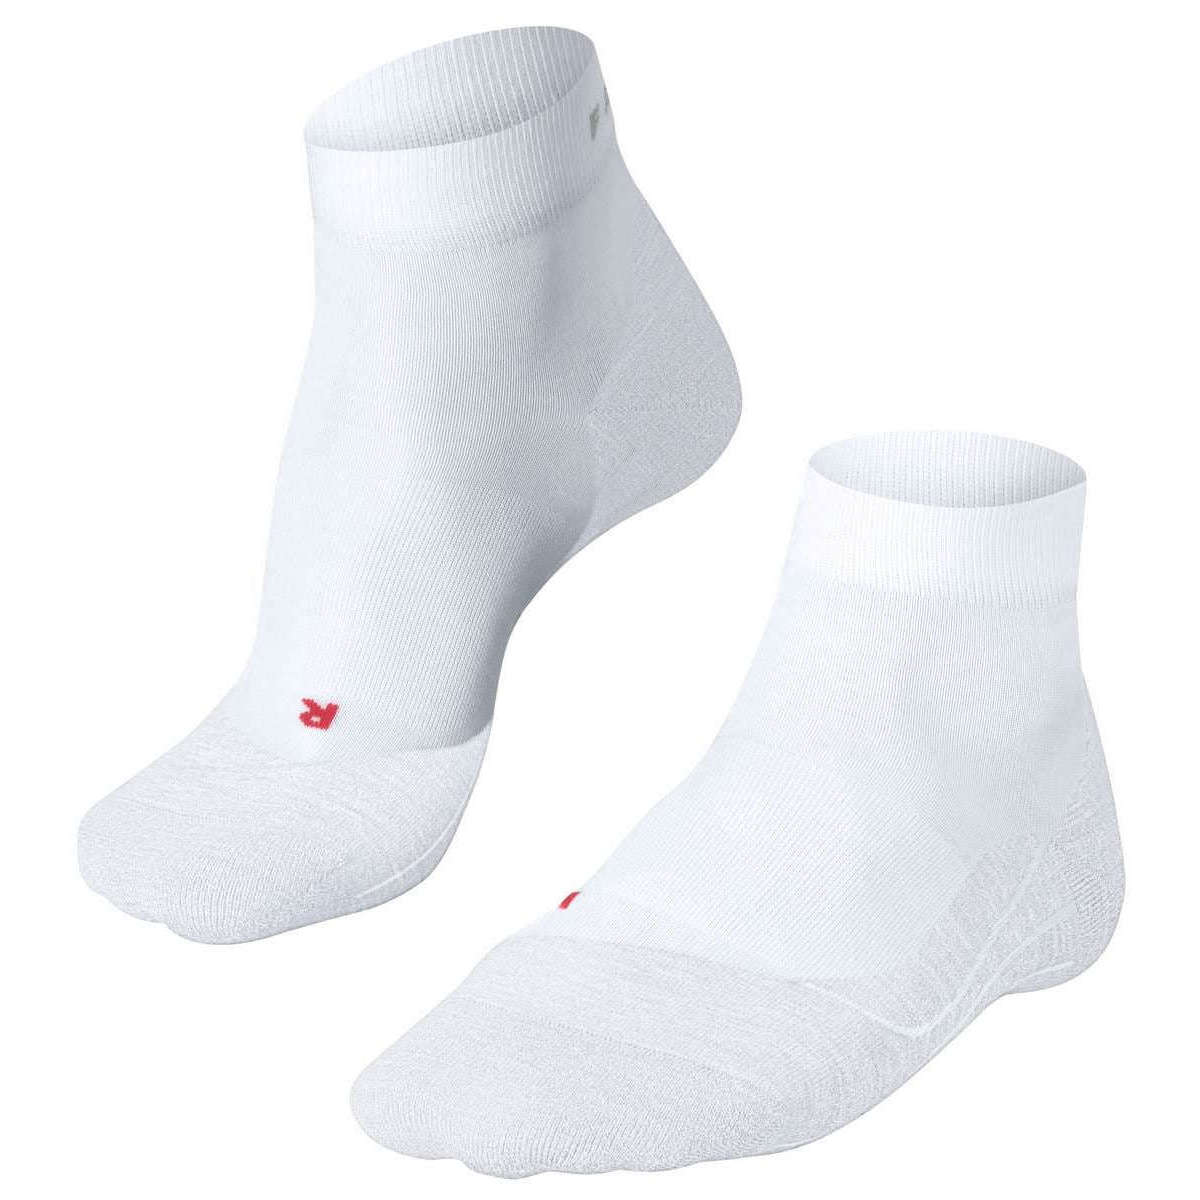 Falke RU4 Endurance Short Socks - White